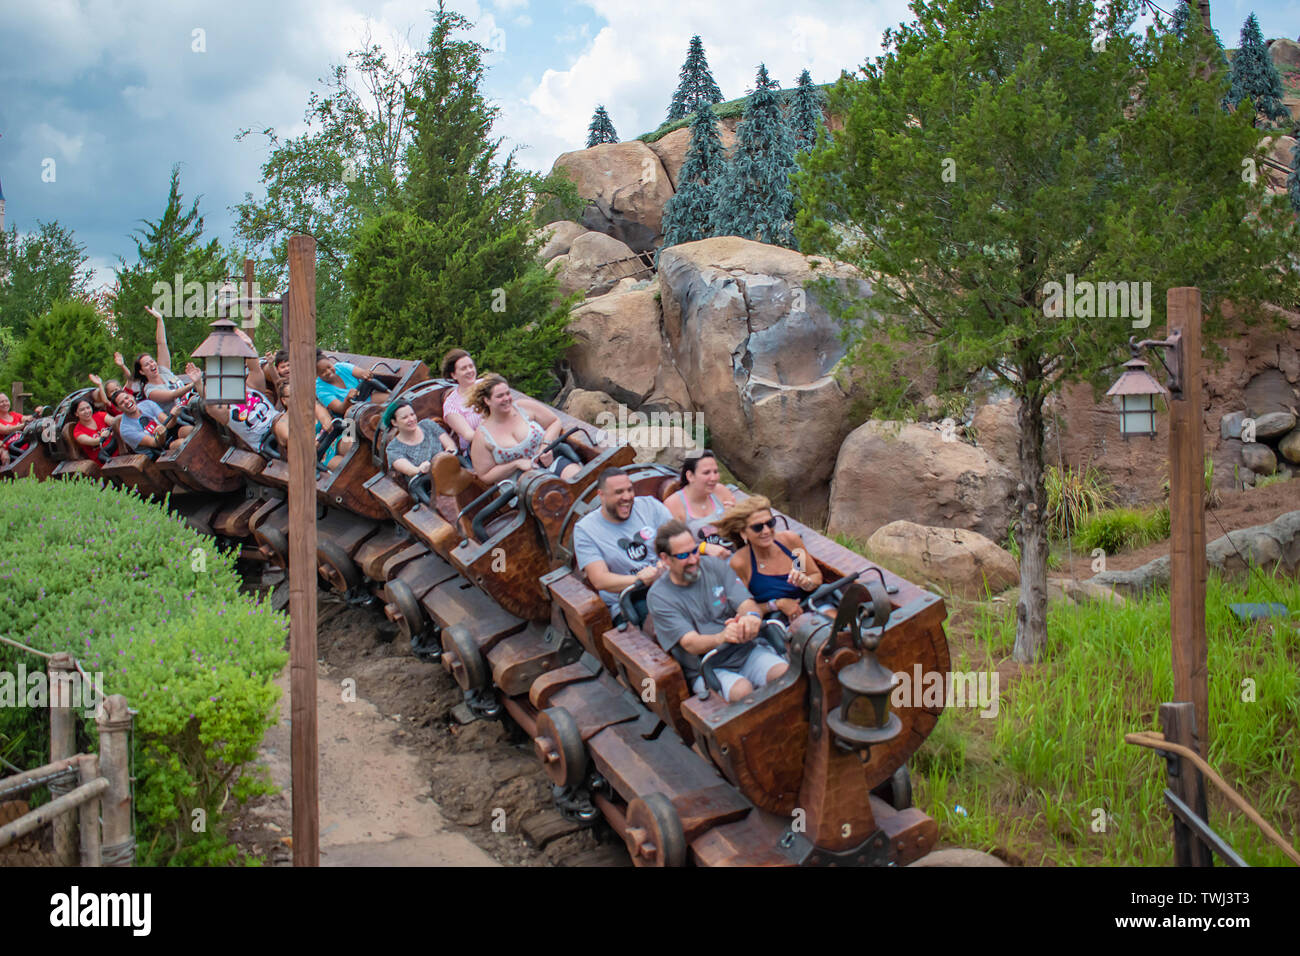 Disney magic kingdom train hi-res stock photography and images - Alamy